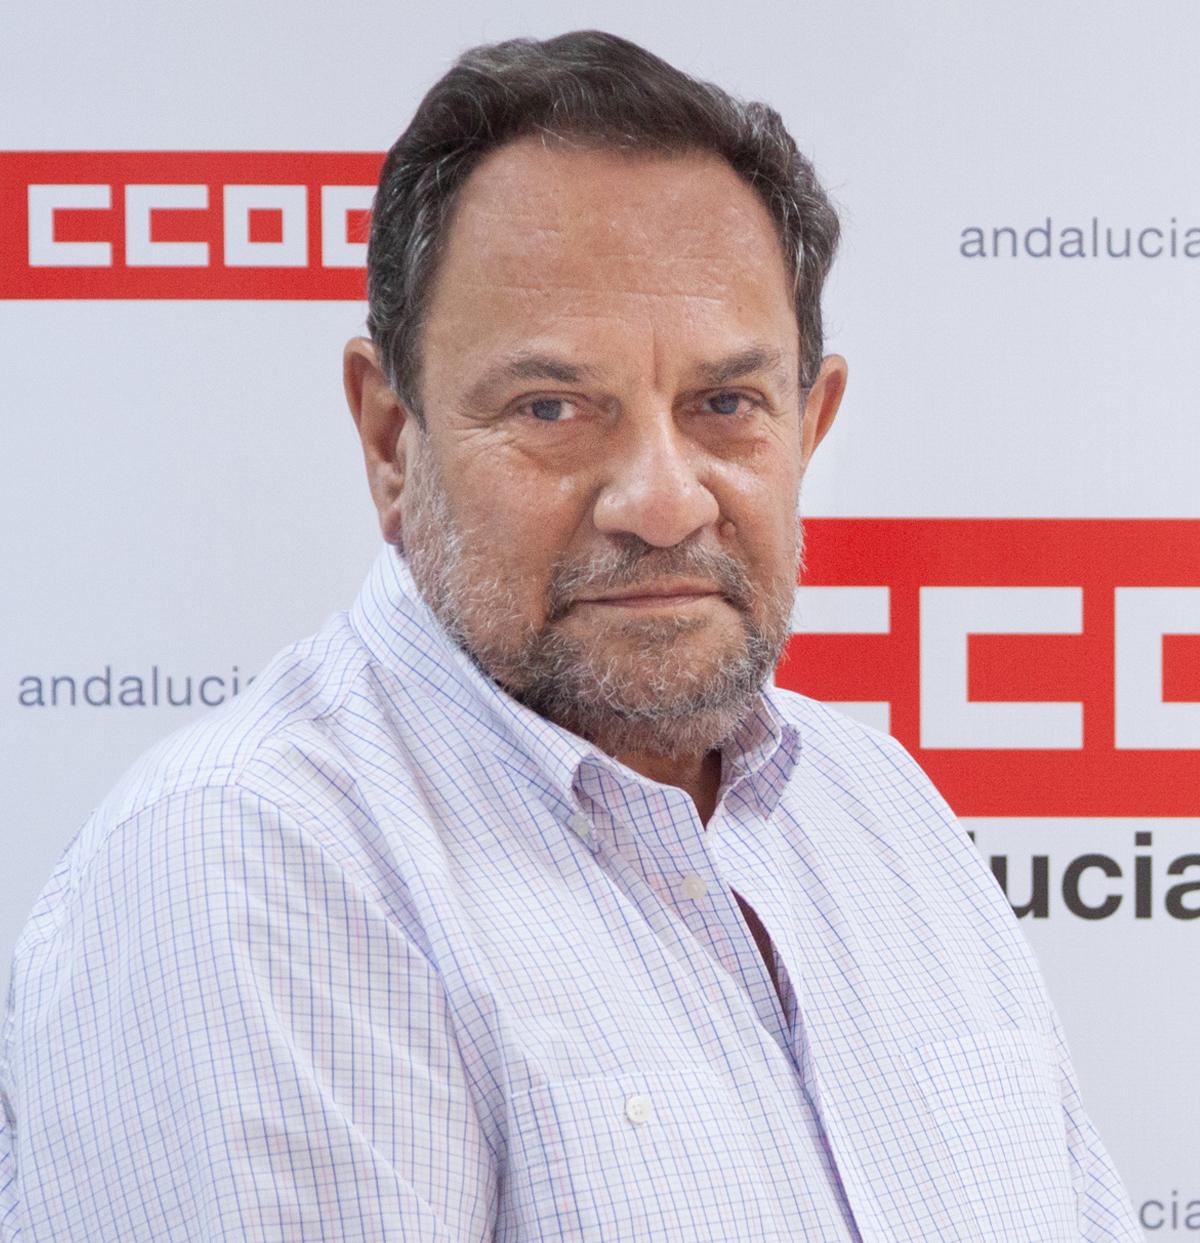 Rafael Fernndez Serra - Comisin Permanente del CES Andaluca